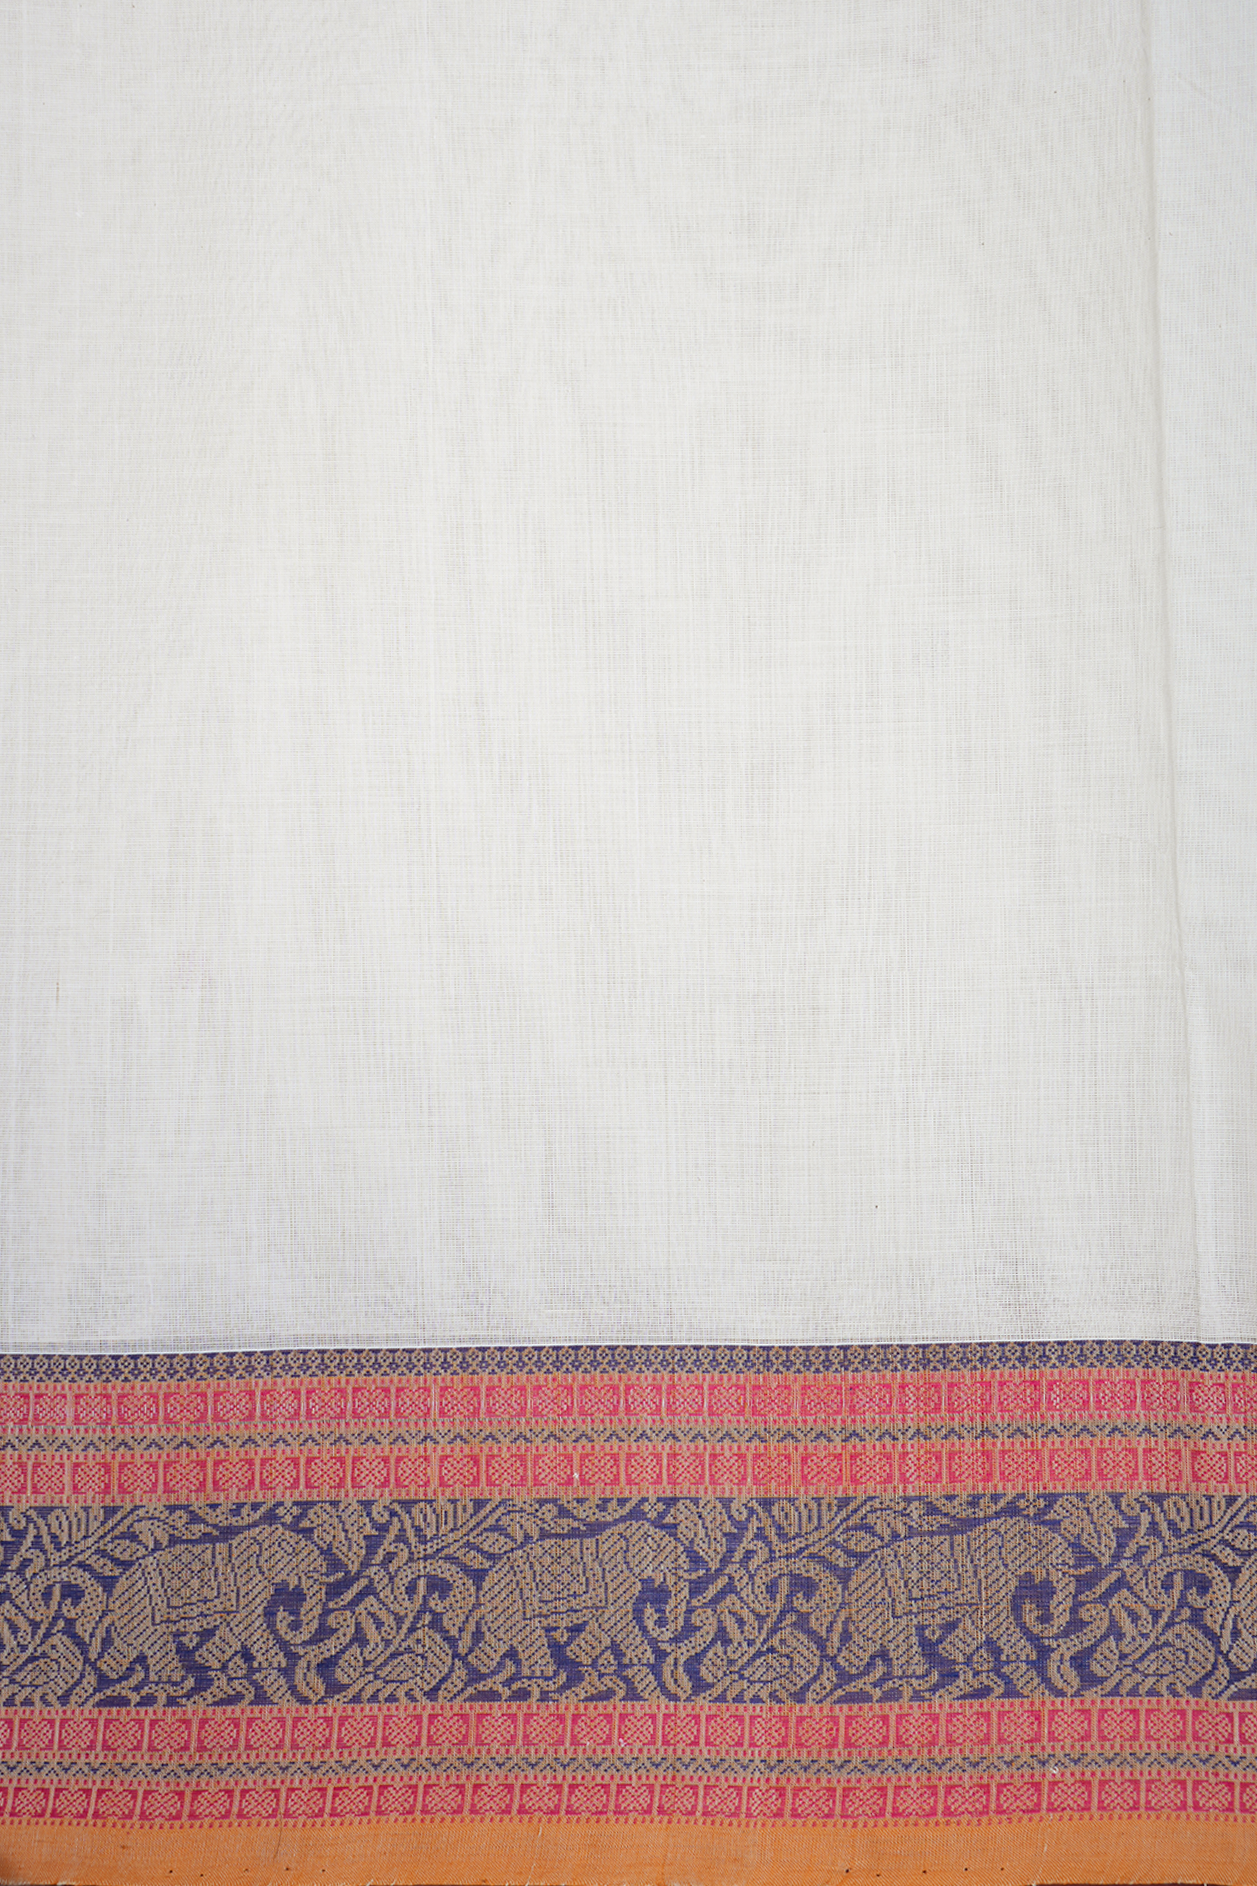 Rudraksh Motifs Off White Coimbatore Cotton Saree